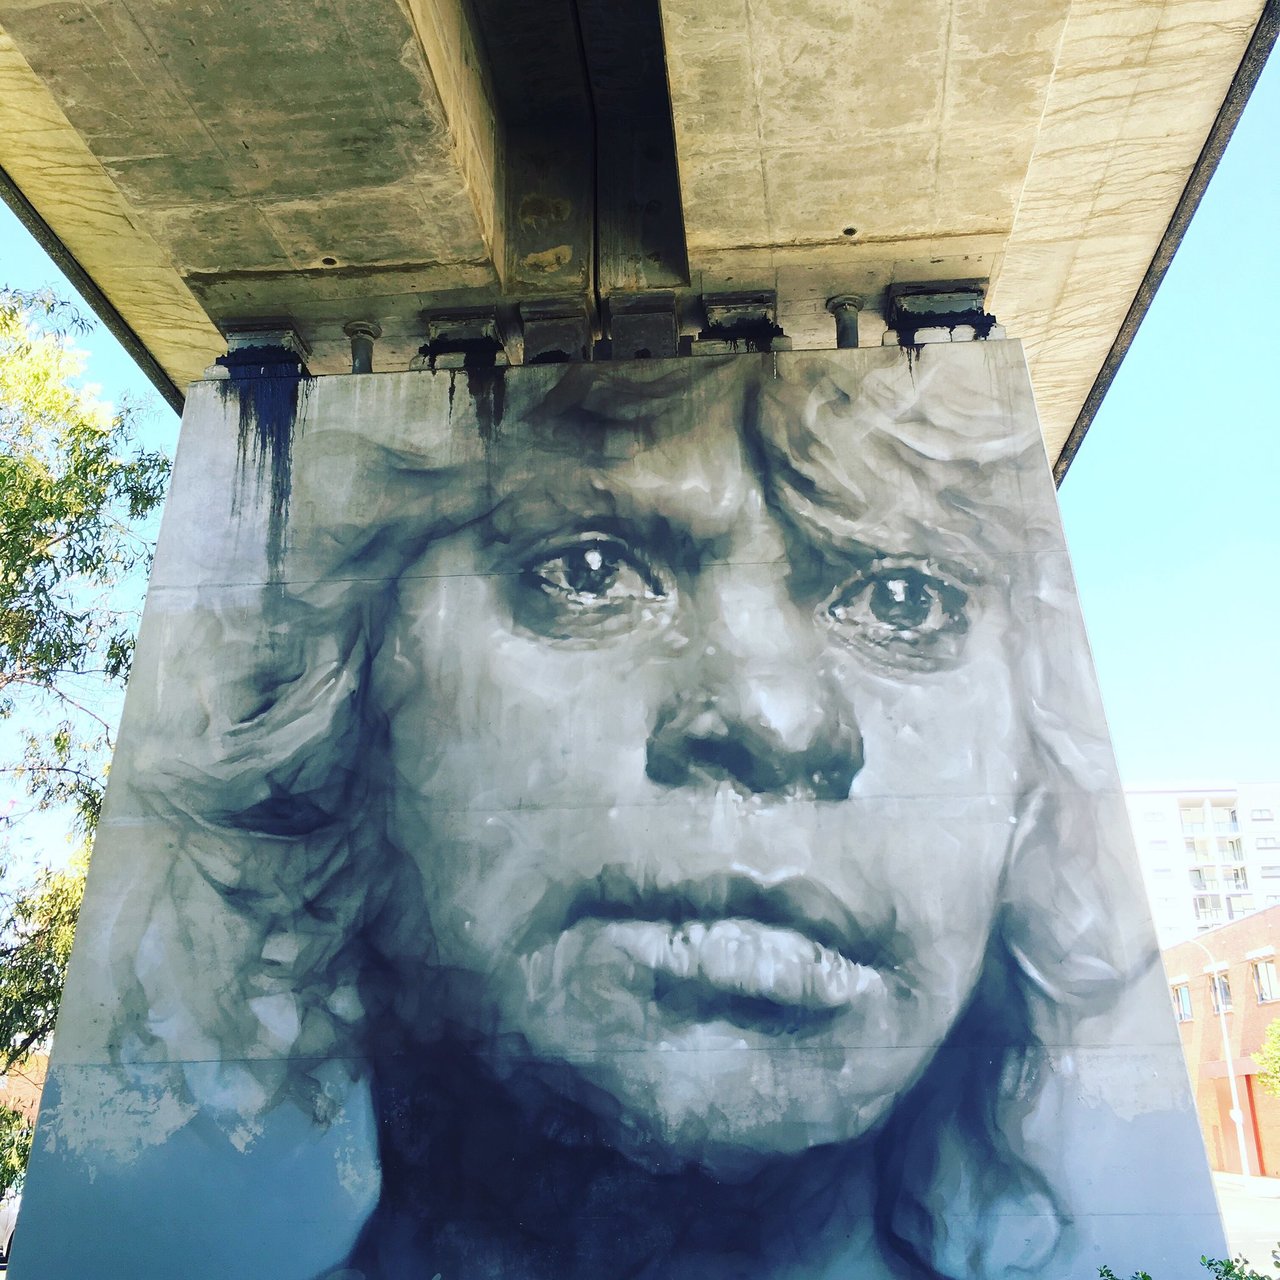 #LP writer in #Brisbane MT @CristianBonetto: Pillars Project turns a rail overpass into #streetart gallery. #travel https://t.co/J9XlwAbzBs